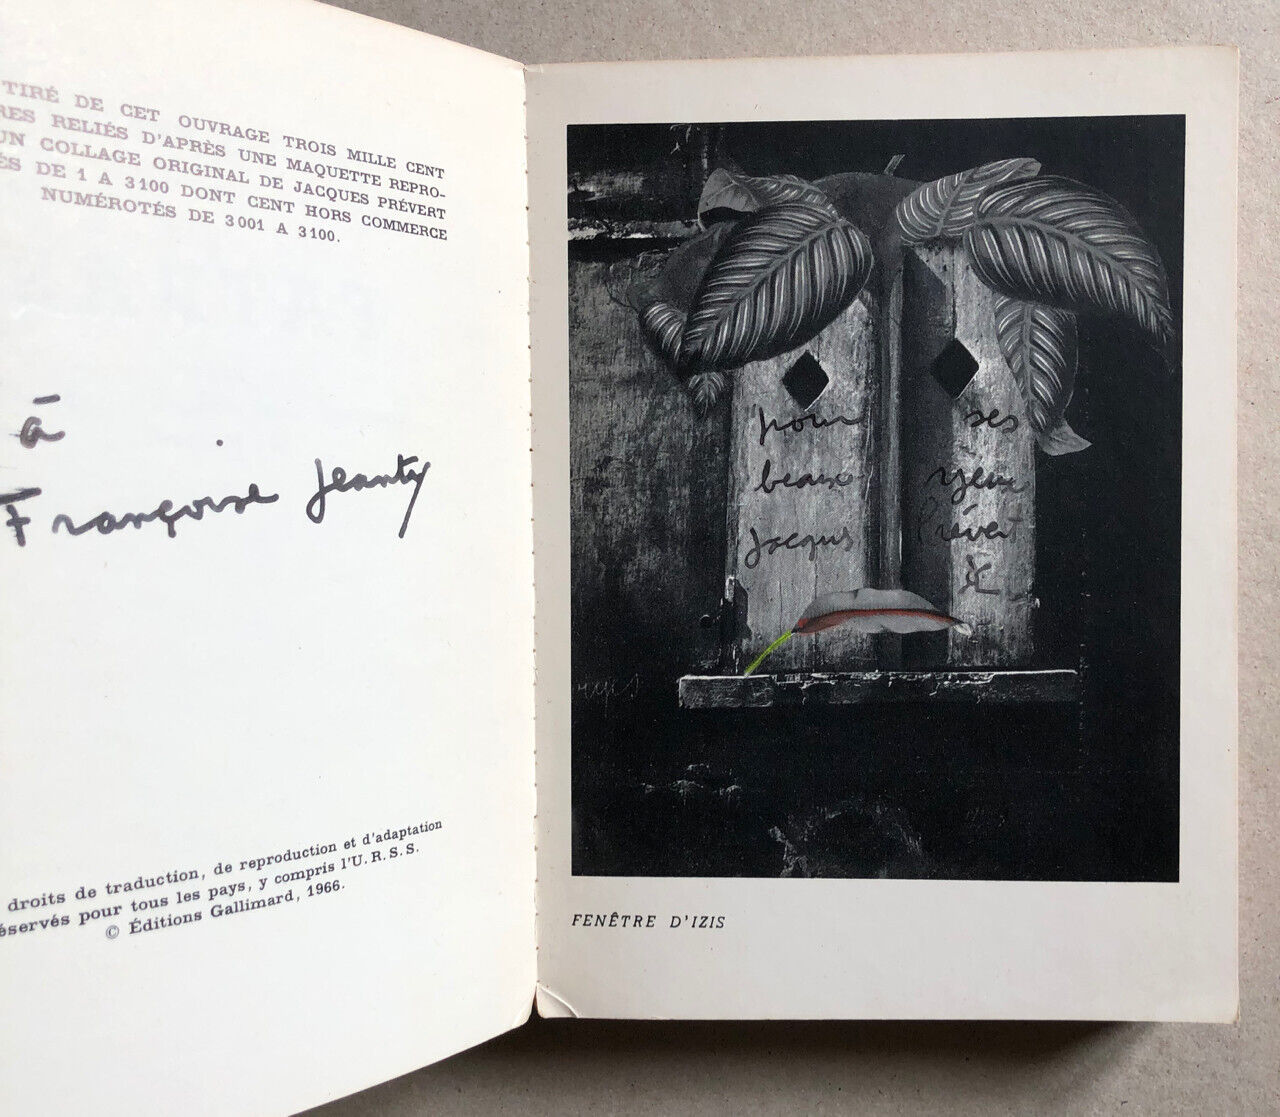 Jacques Prévert — Fatras — É.O. — dessin & envoi autographe — NRF — 1966.